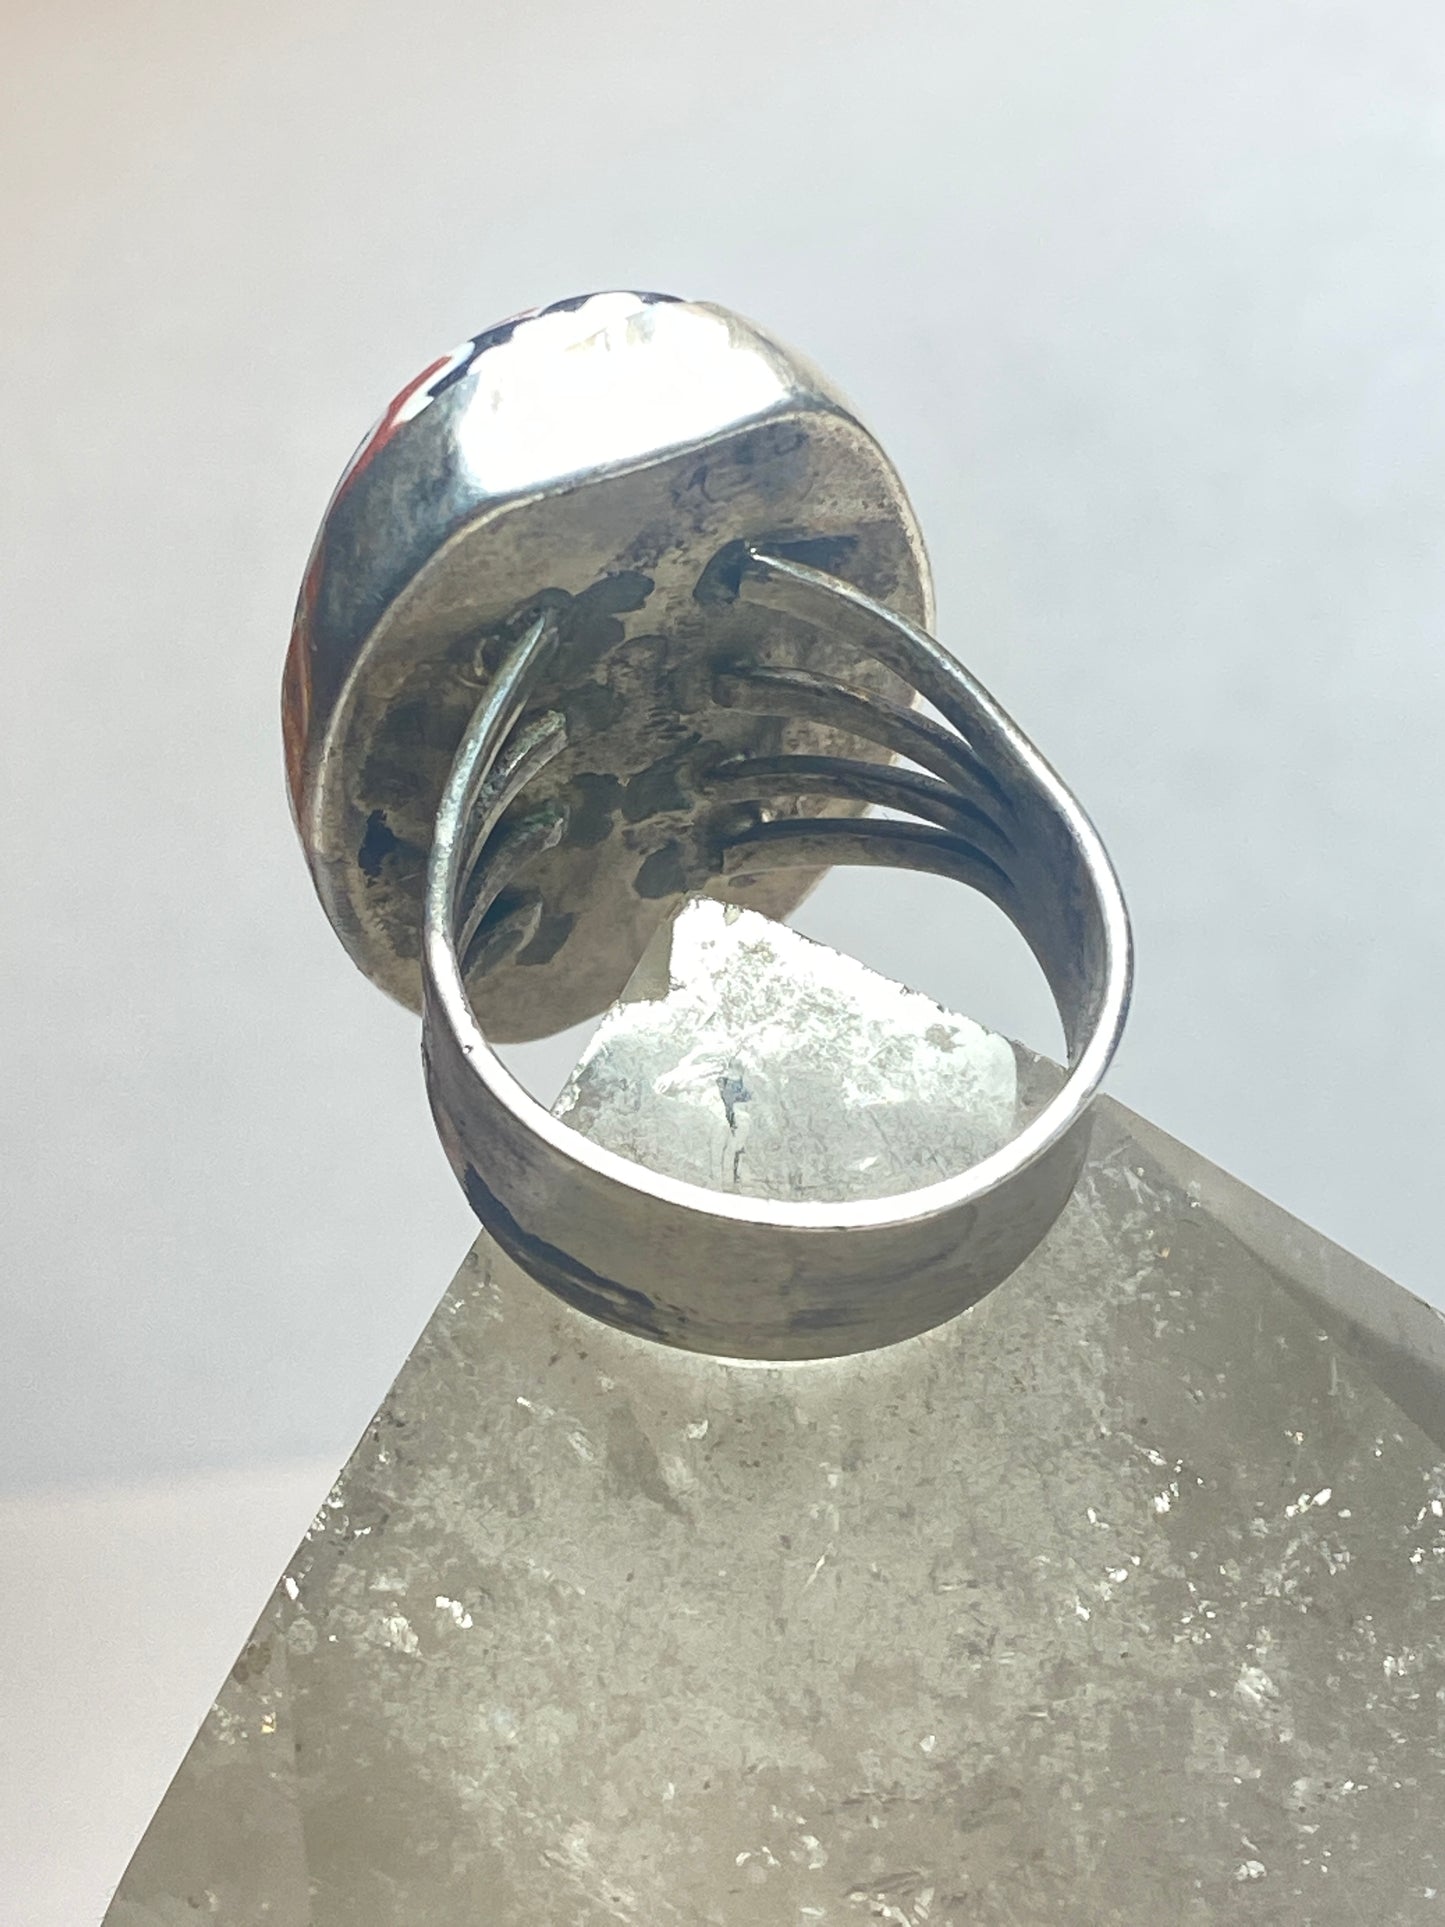 Chevron ring size 10.25 trade bead Navajo southwest sterling silver women